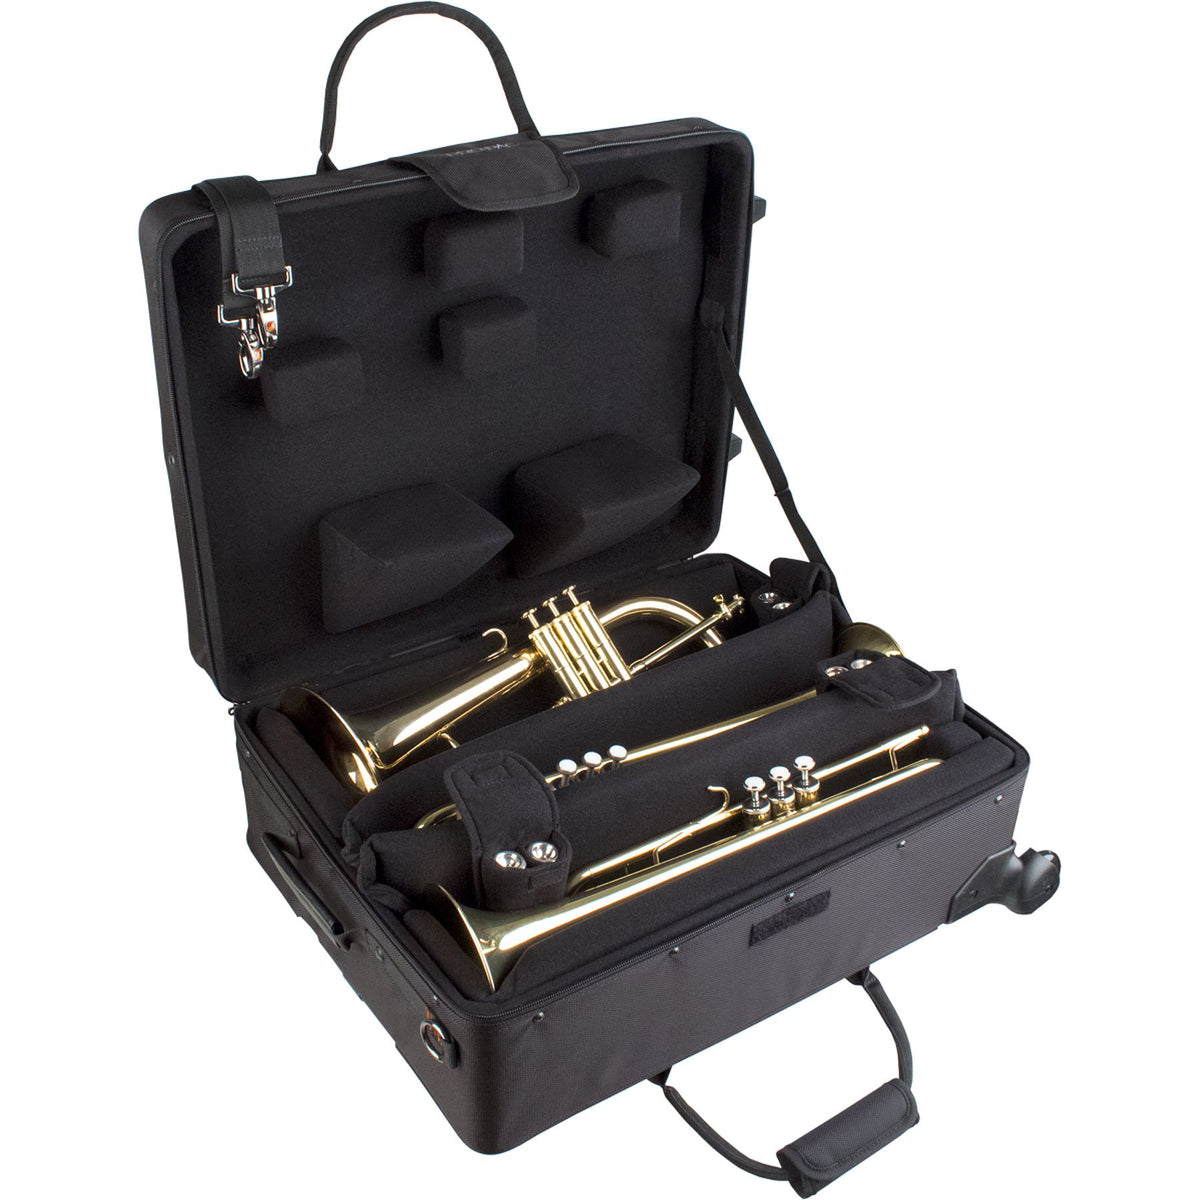 Protec - Quad Horn IPAC Case with Wheels (Trumpet/Flugelhorn)-Case-Protec-Music Elements